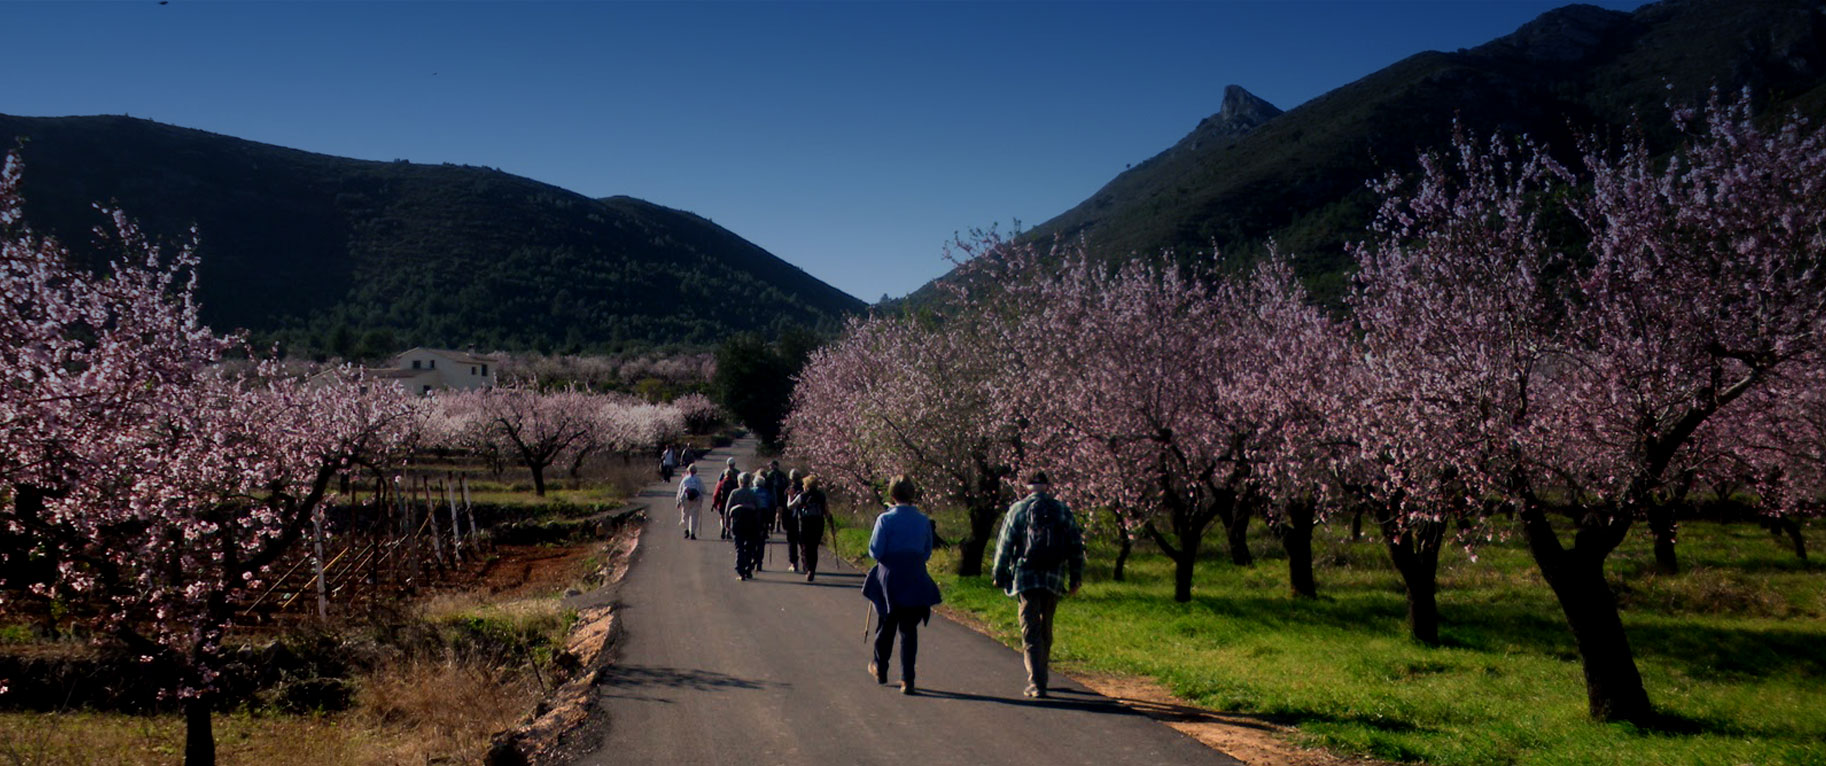 Ruta #AlcalalíEnFlor almendros en flor Feslalí – Alcalalí turismo